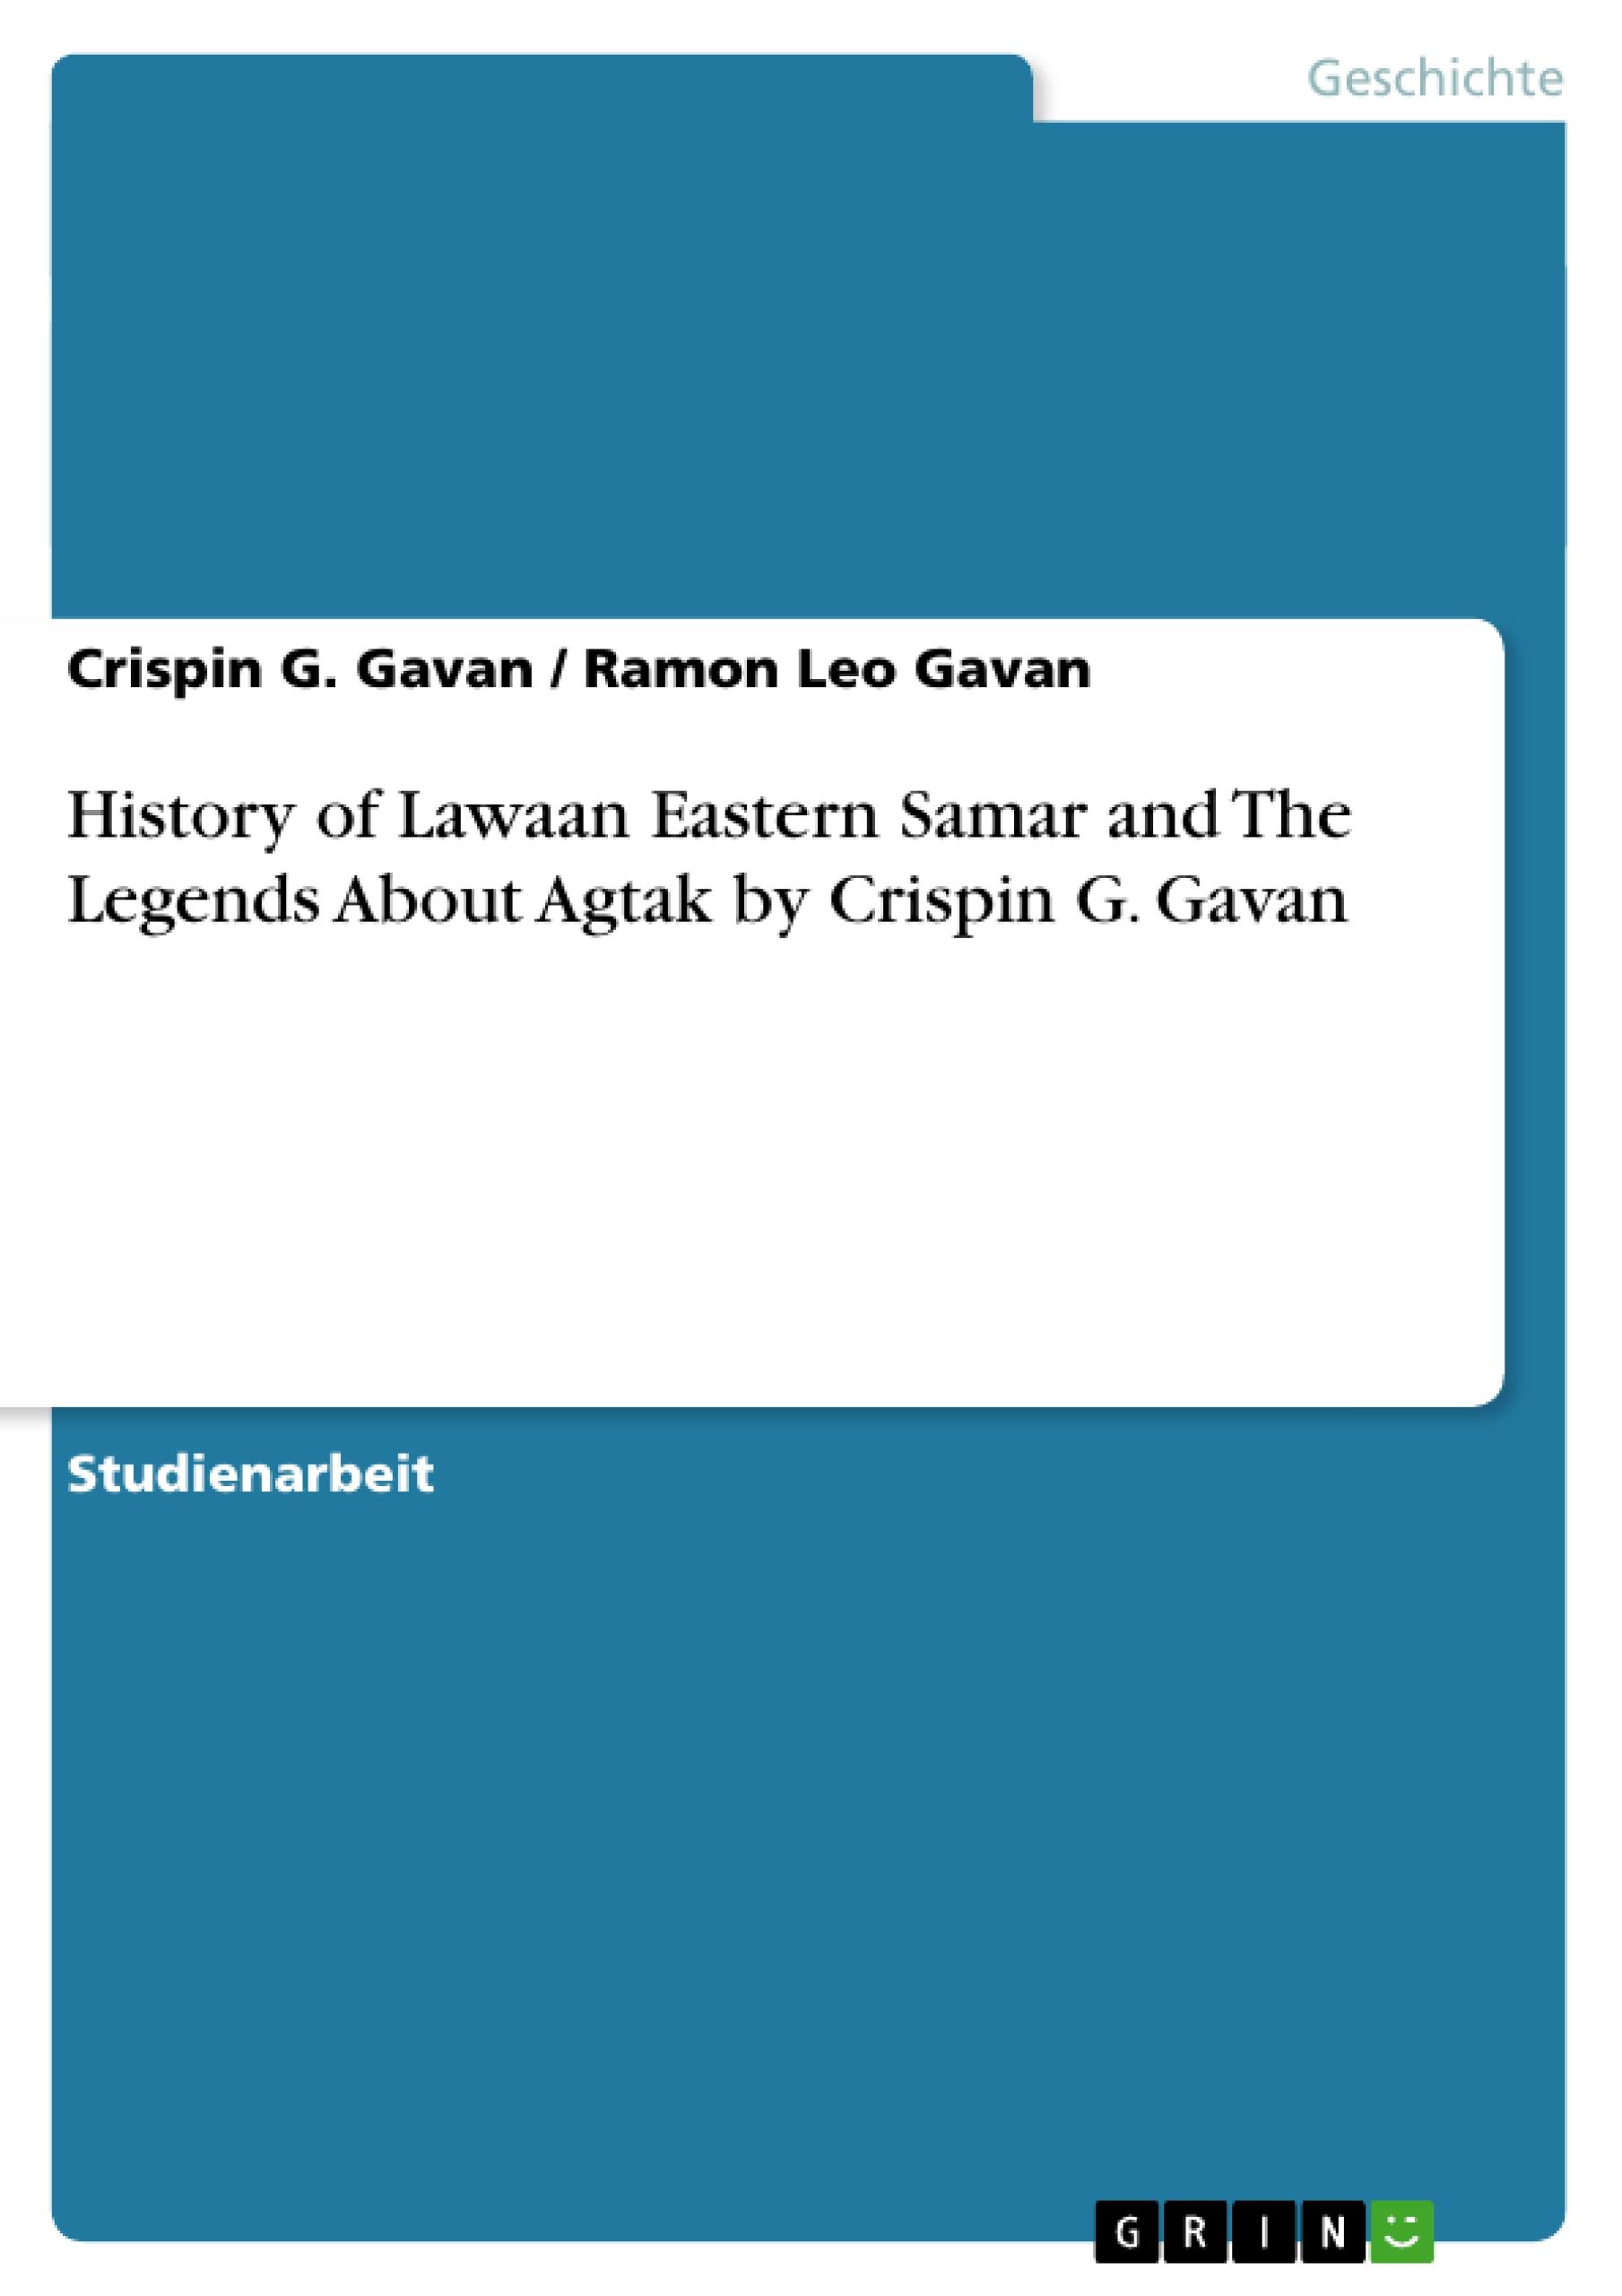 History of Lawaan Eastern Samar and The Legends About Agtak by Crispin G. Gavan - Gavan, Ramon Leo Gavan, Crispin G.